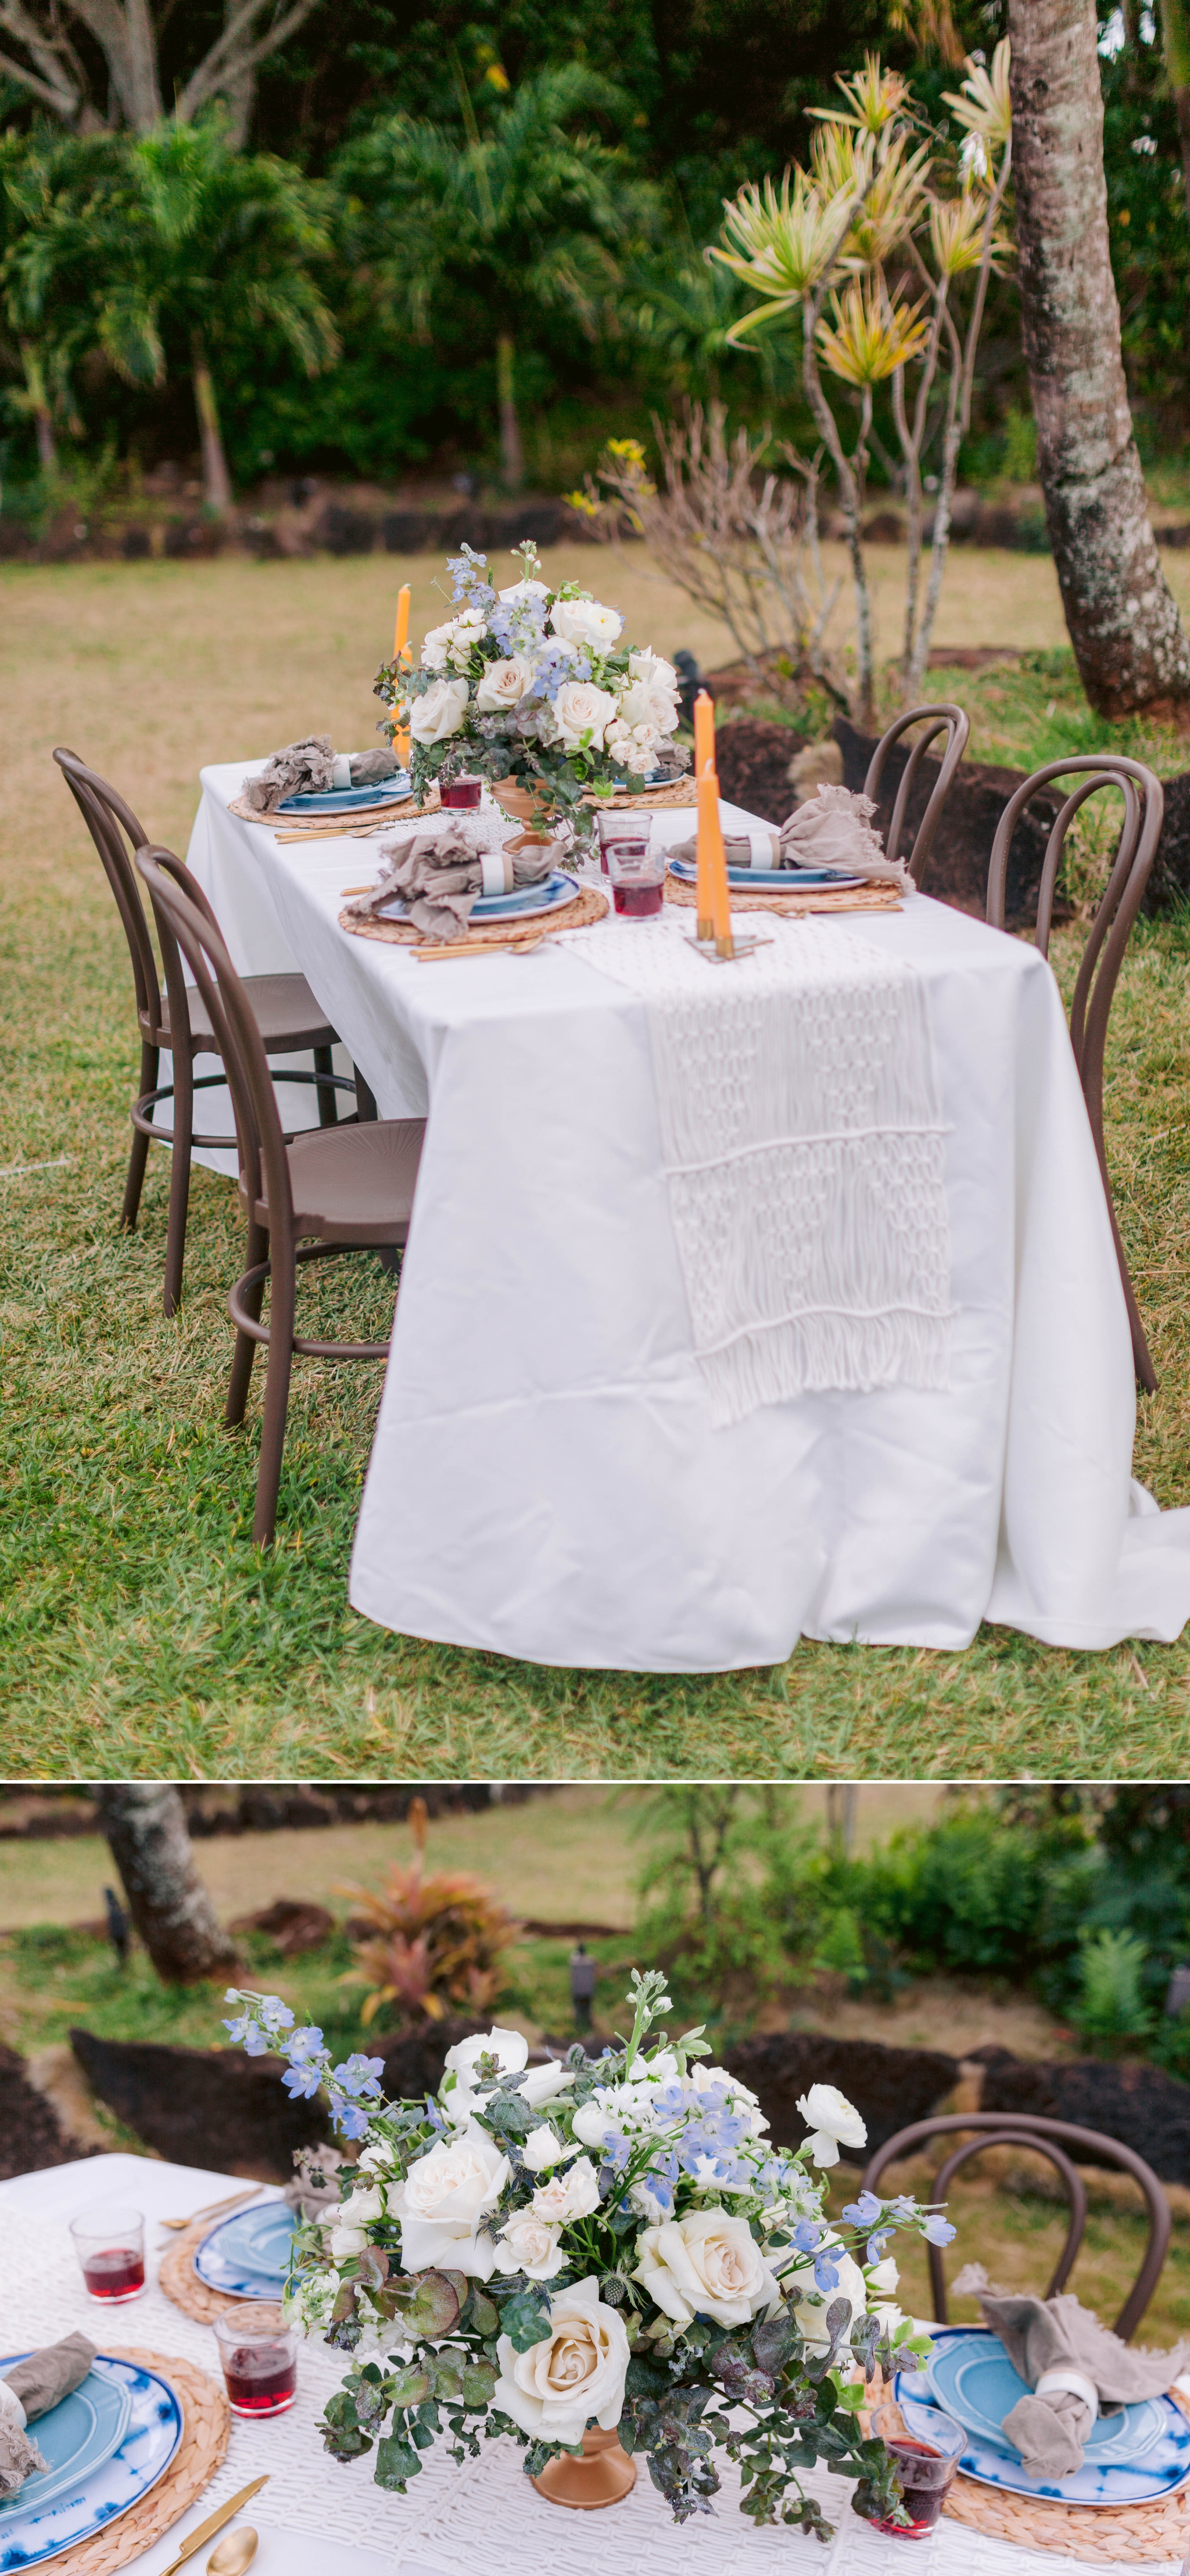 Reception table scape at an outdoor wedding - Ana + Elijah - Wedding at Loulu Palm in Haleiwa, HI - Oahu Hawaii Wedding Photographer 